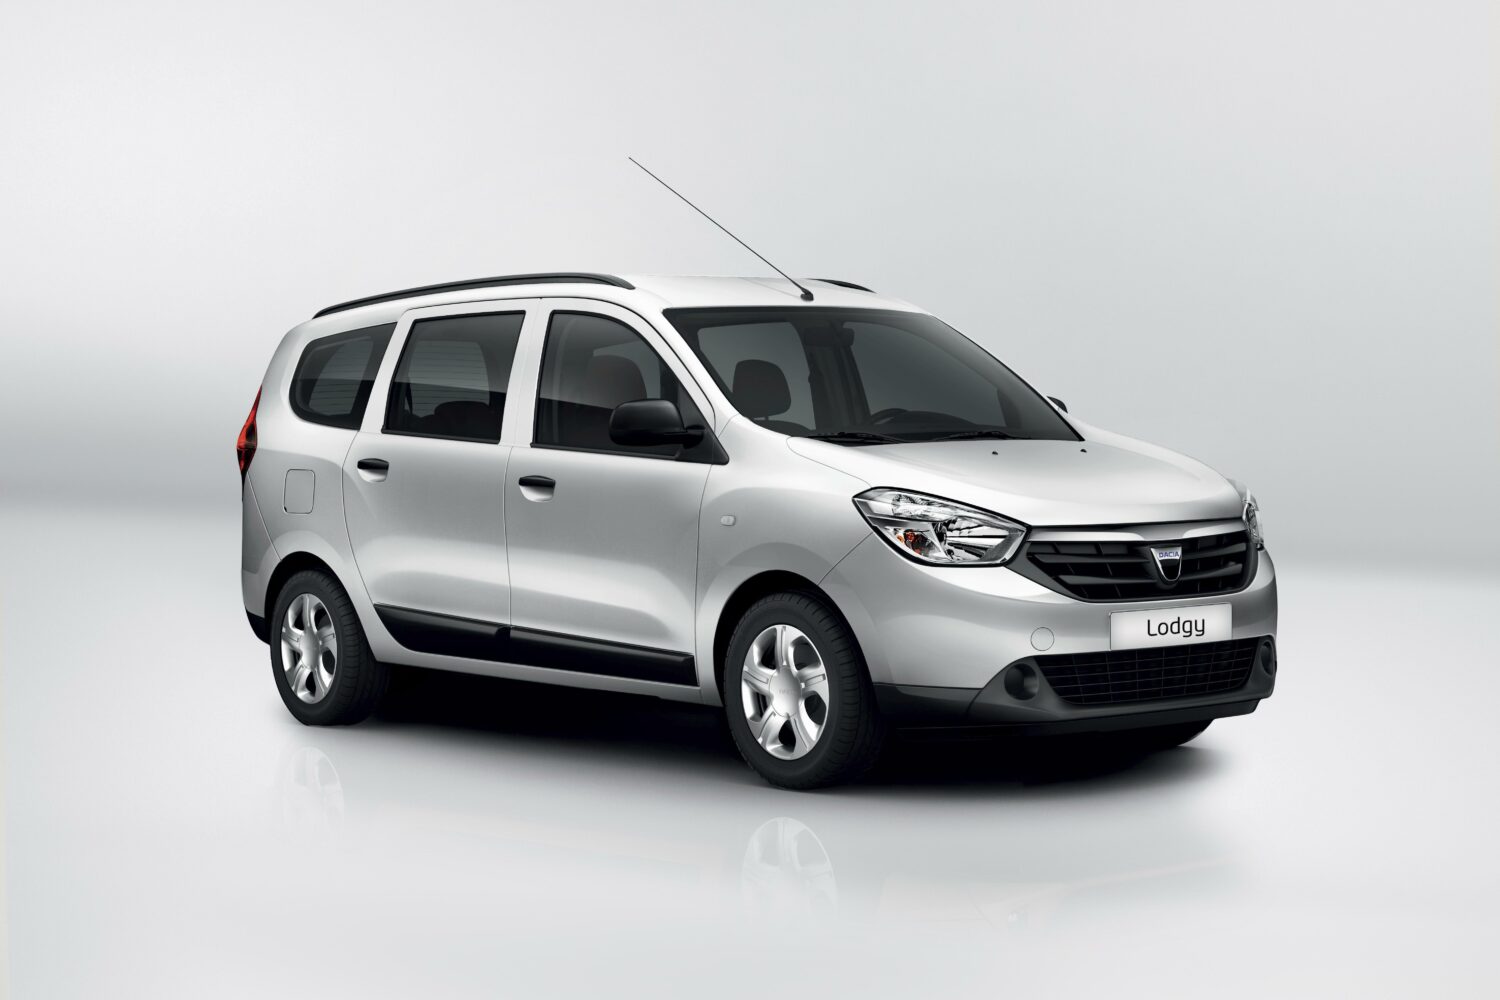 2012 - Dacia LODGY.jpg